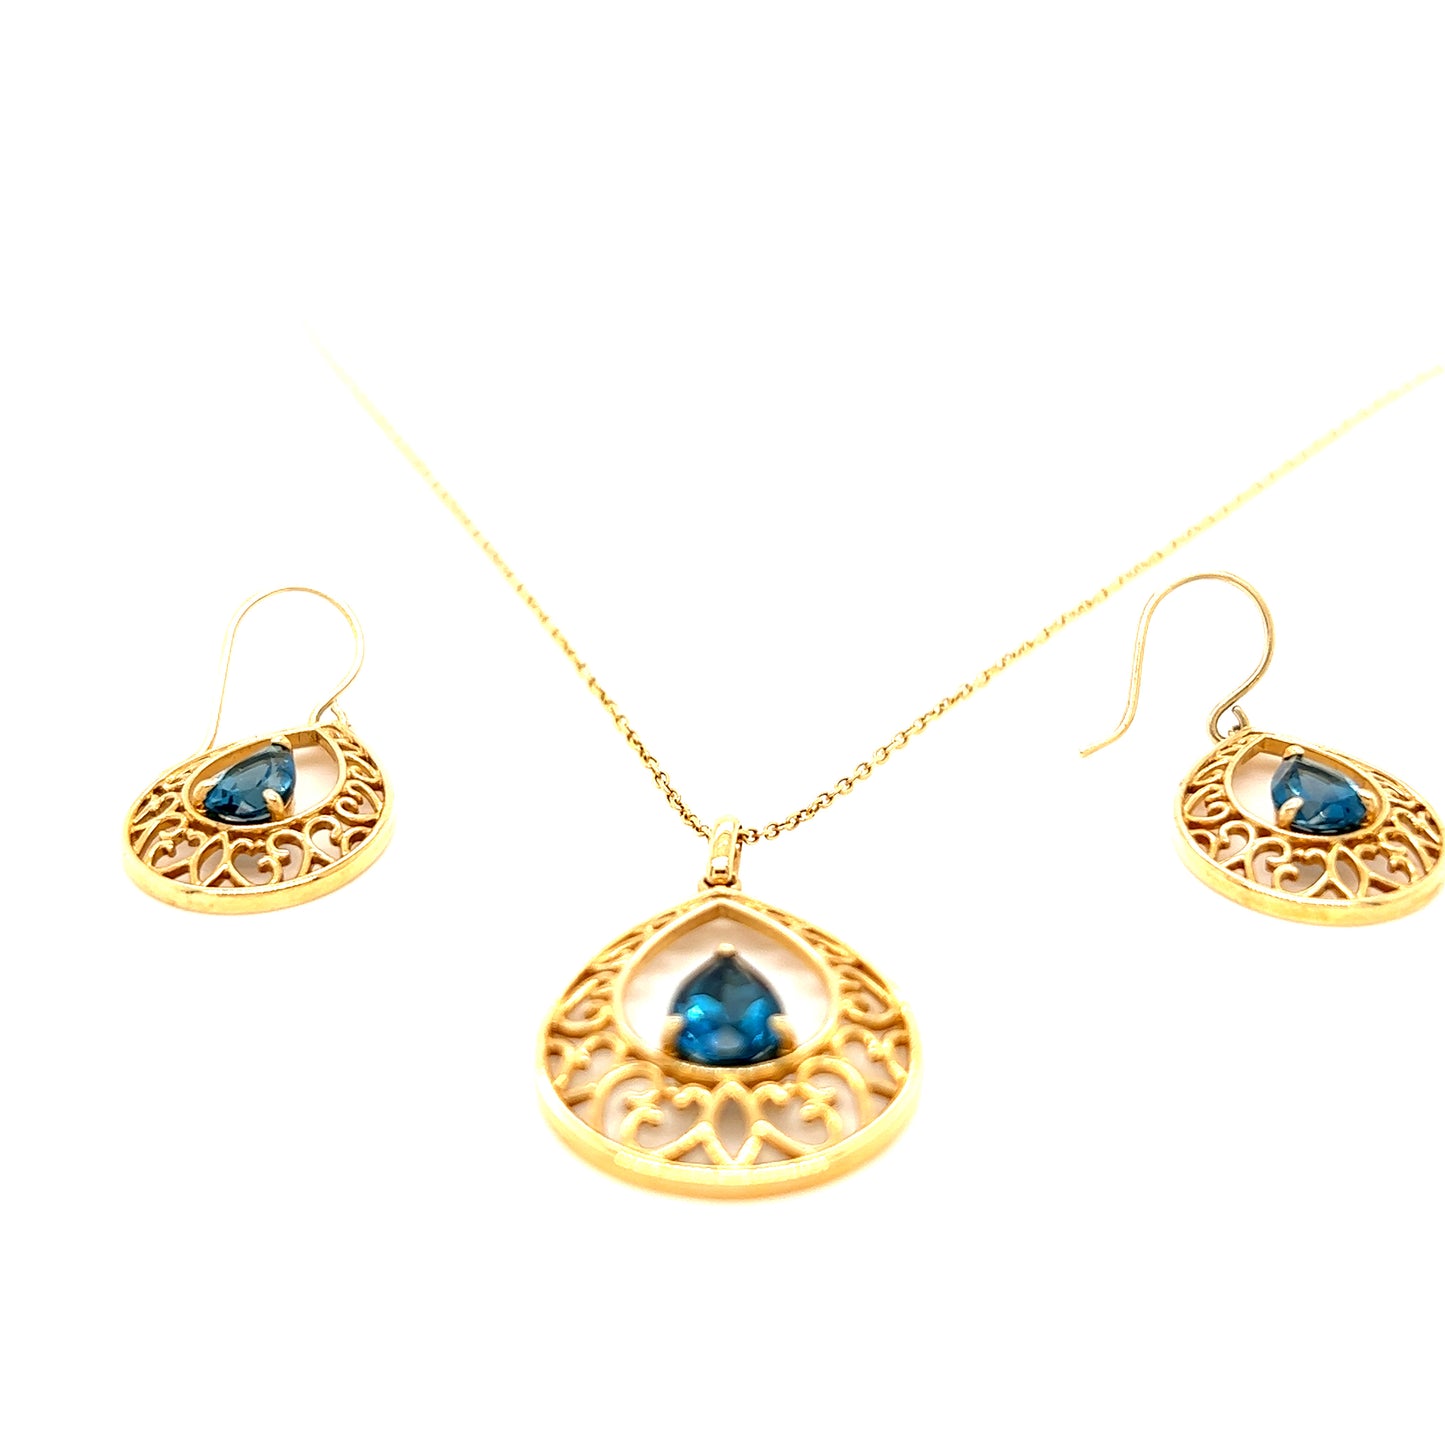 Aqua yellow gold pendant set